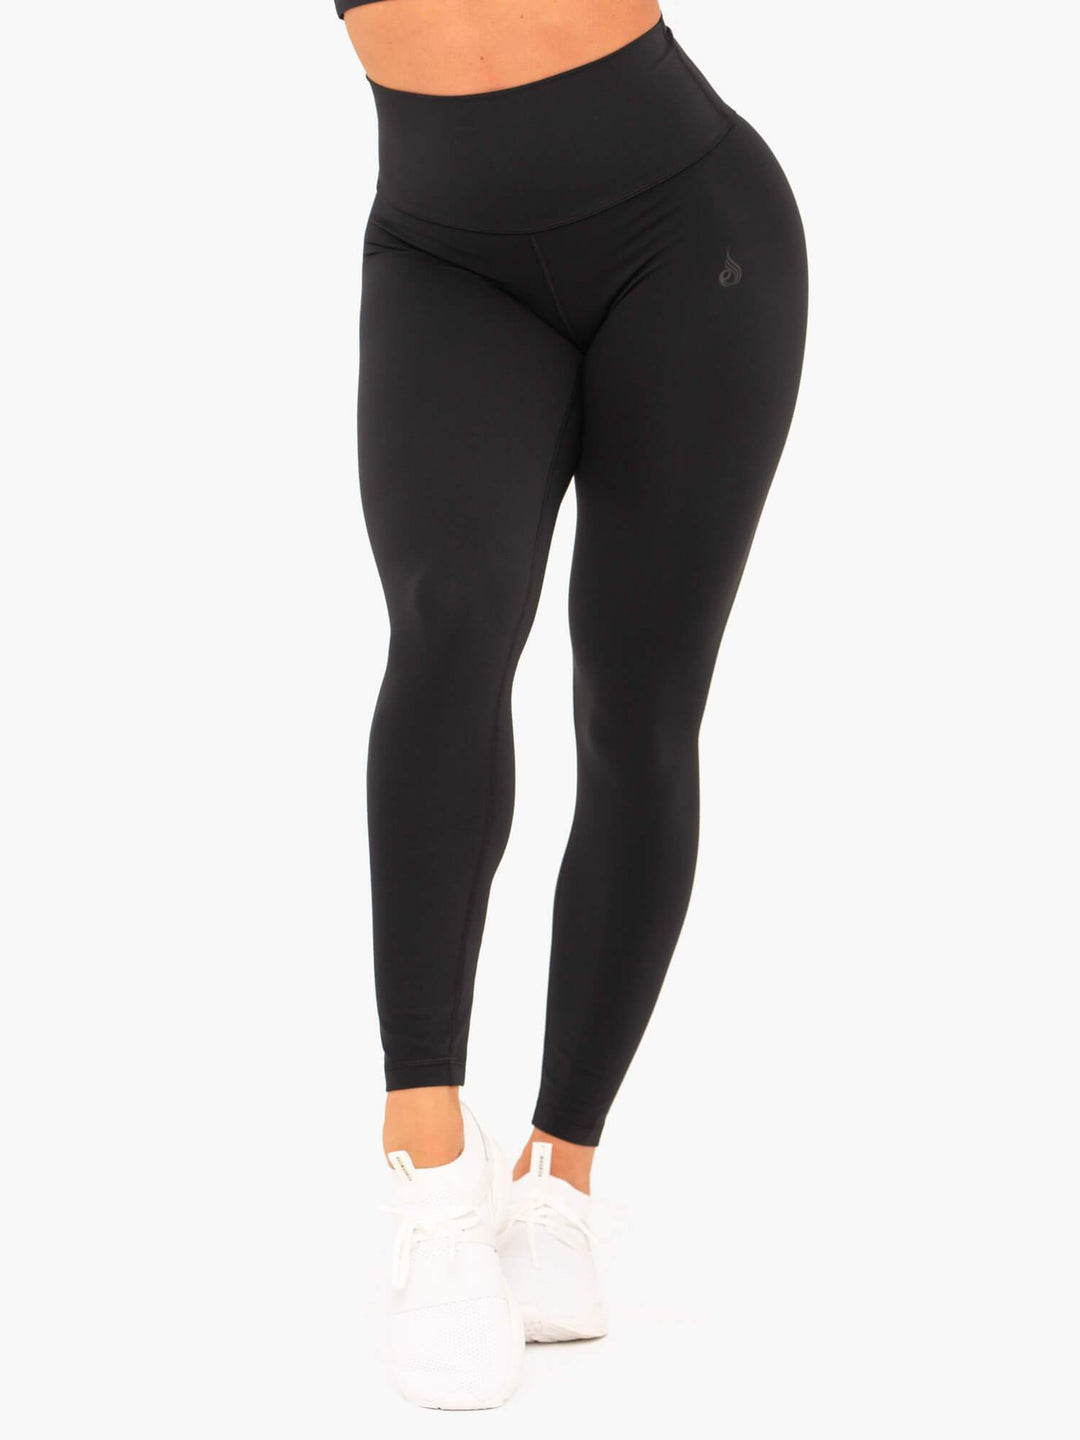 1 Pcs High Waisted Yoga Pants Women's Leggings With Pockets,xl